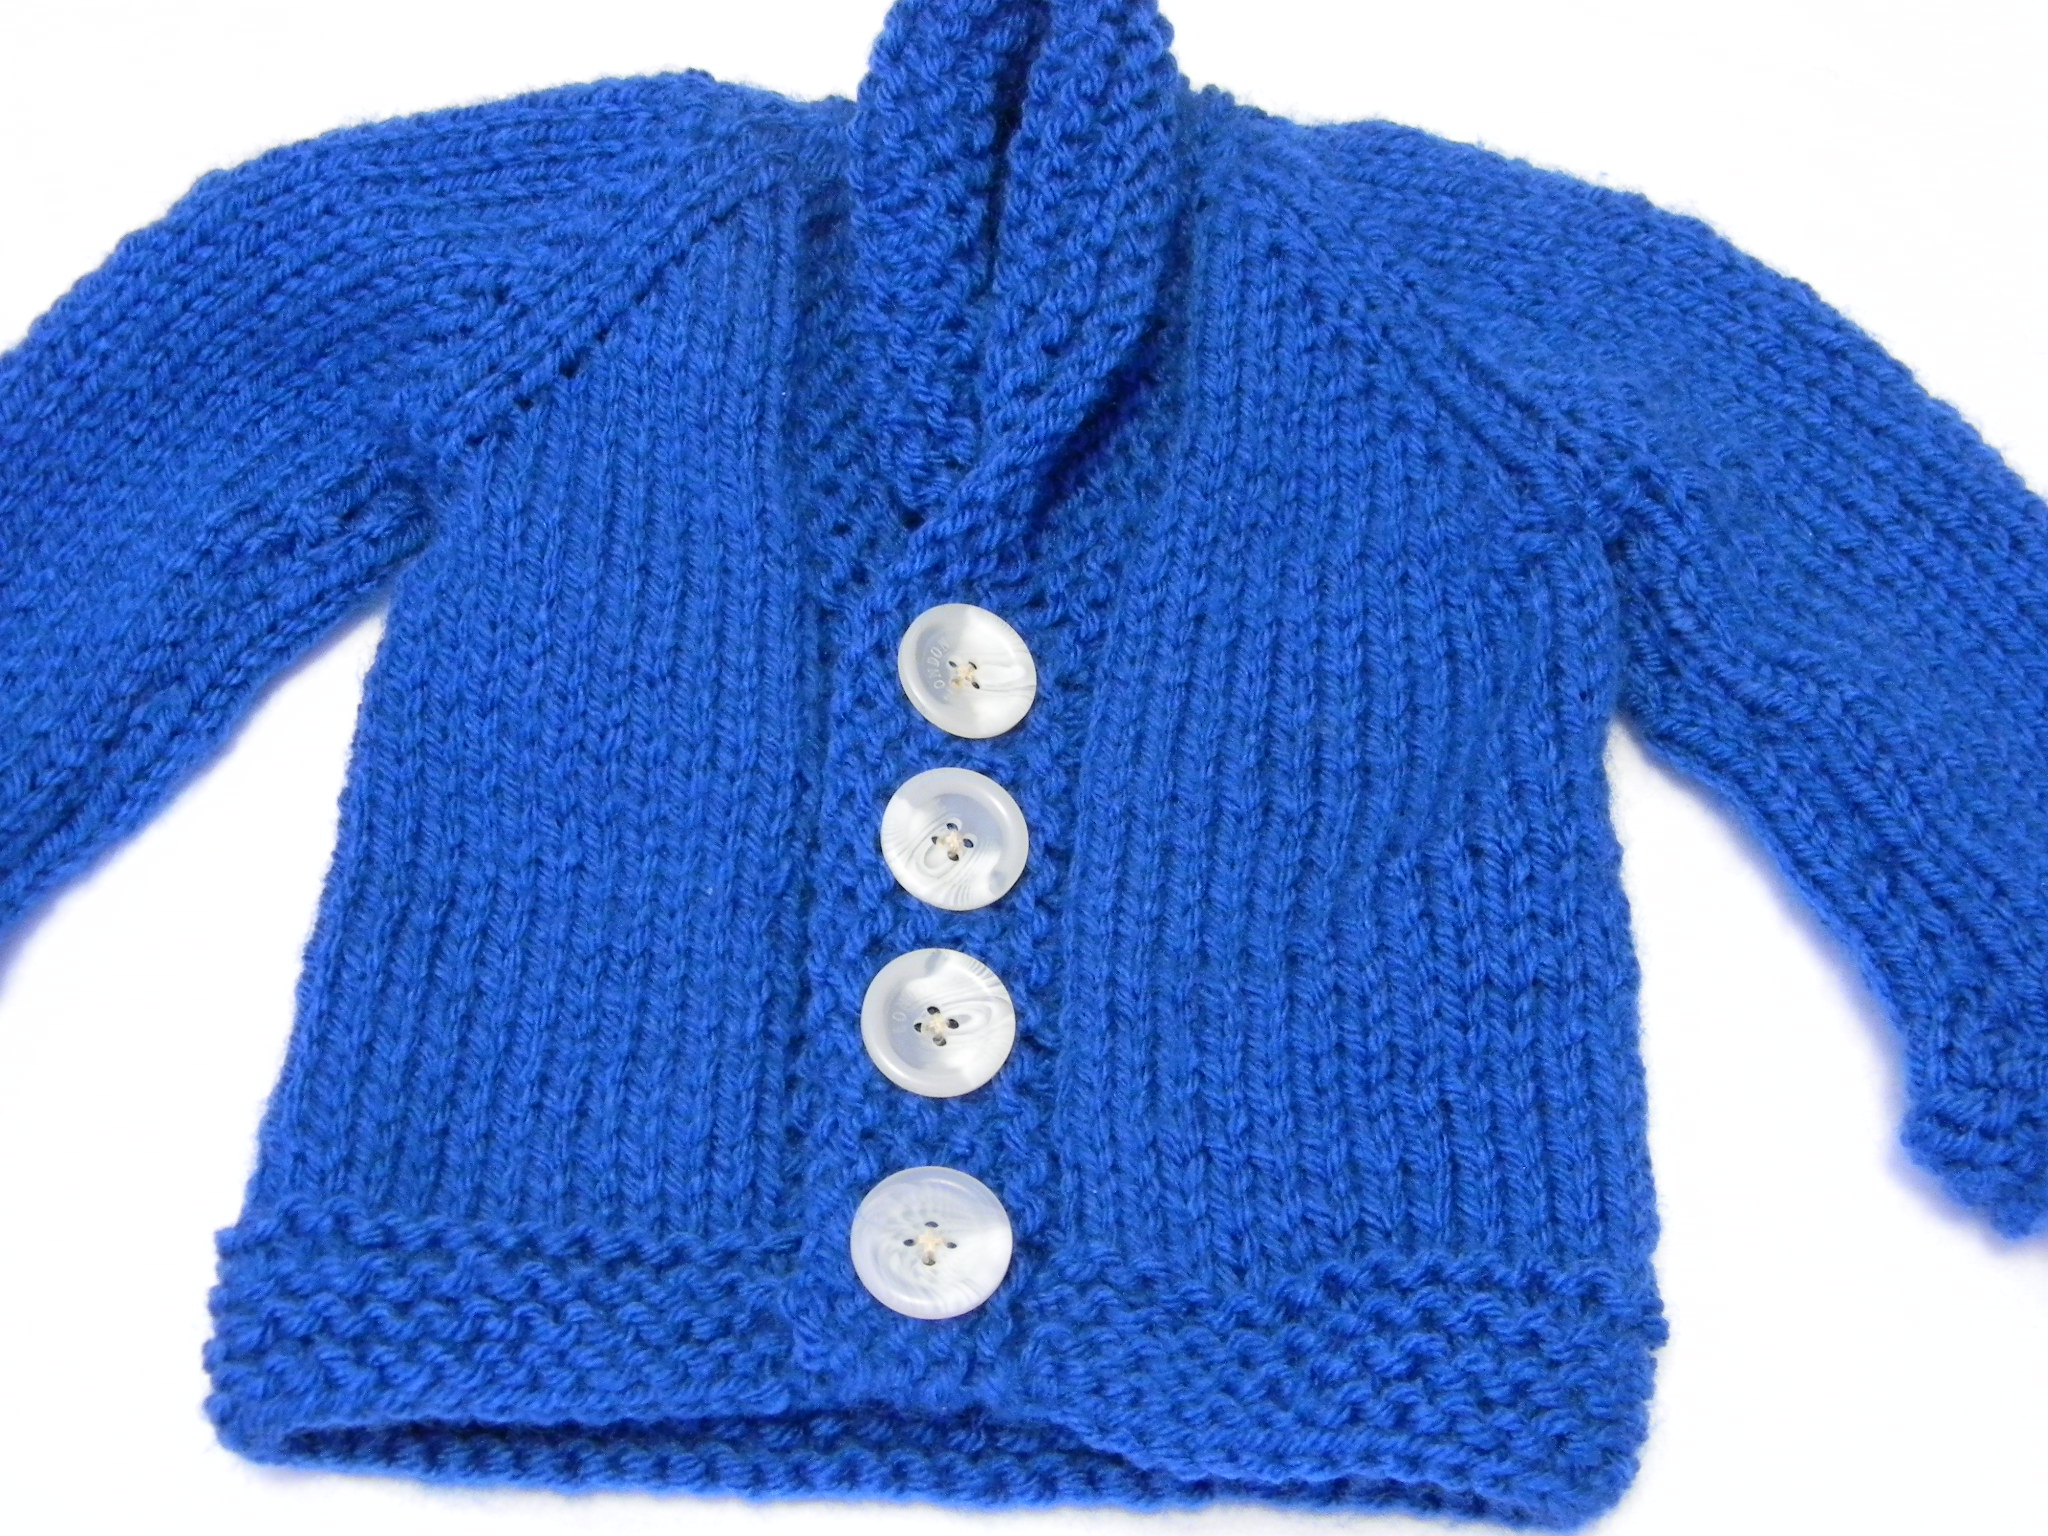 Knitting Pattern: Child&apos;s Hooded Sweater 1 (Photo)